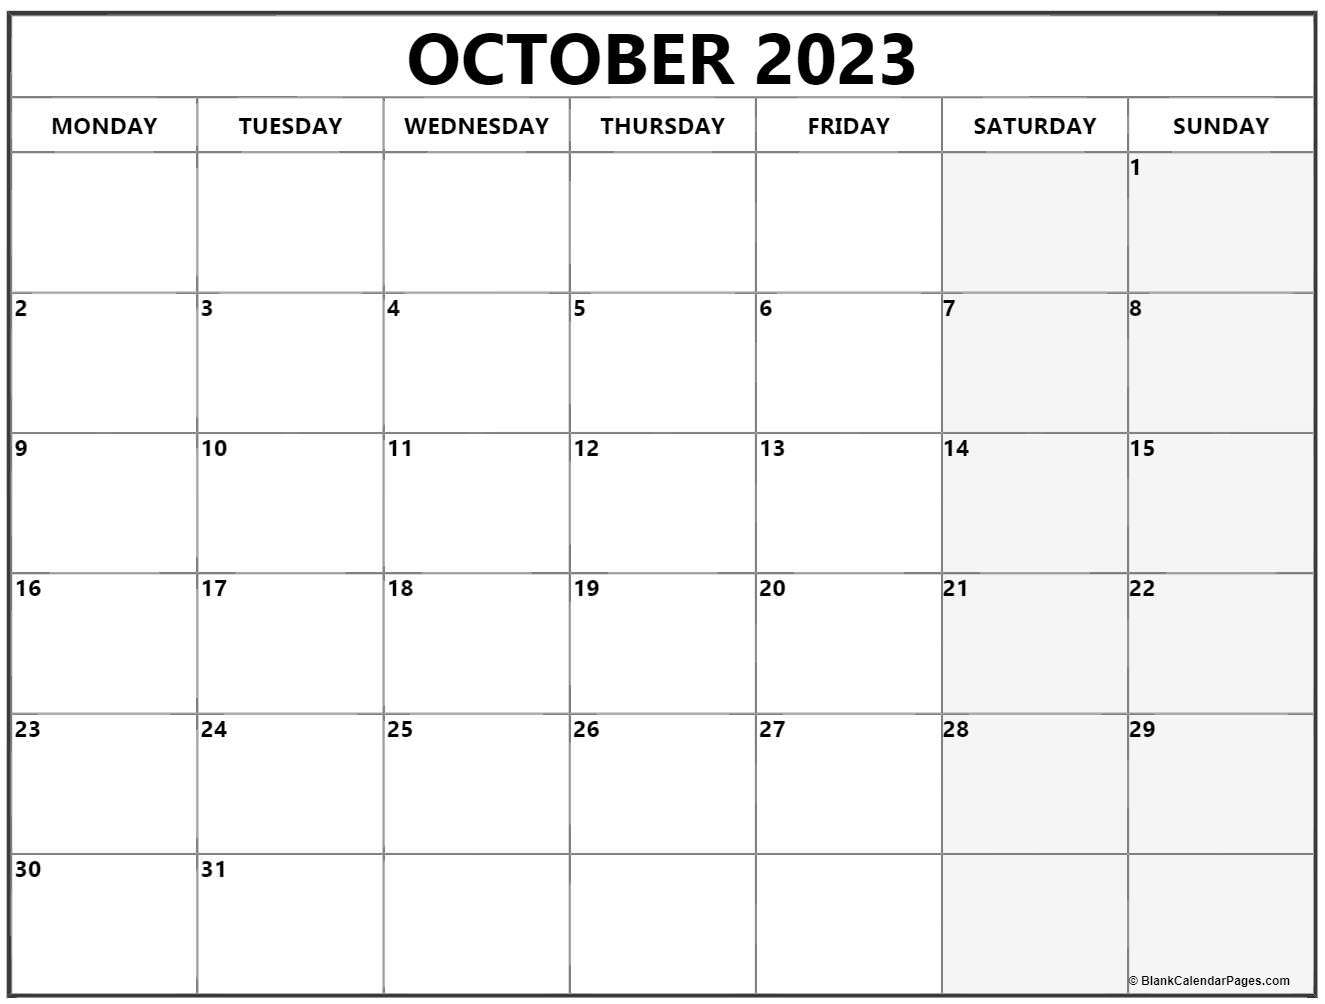 October 2023 Monday calendar. Monday to Sunday